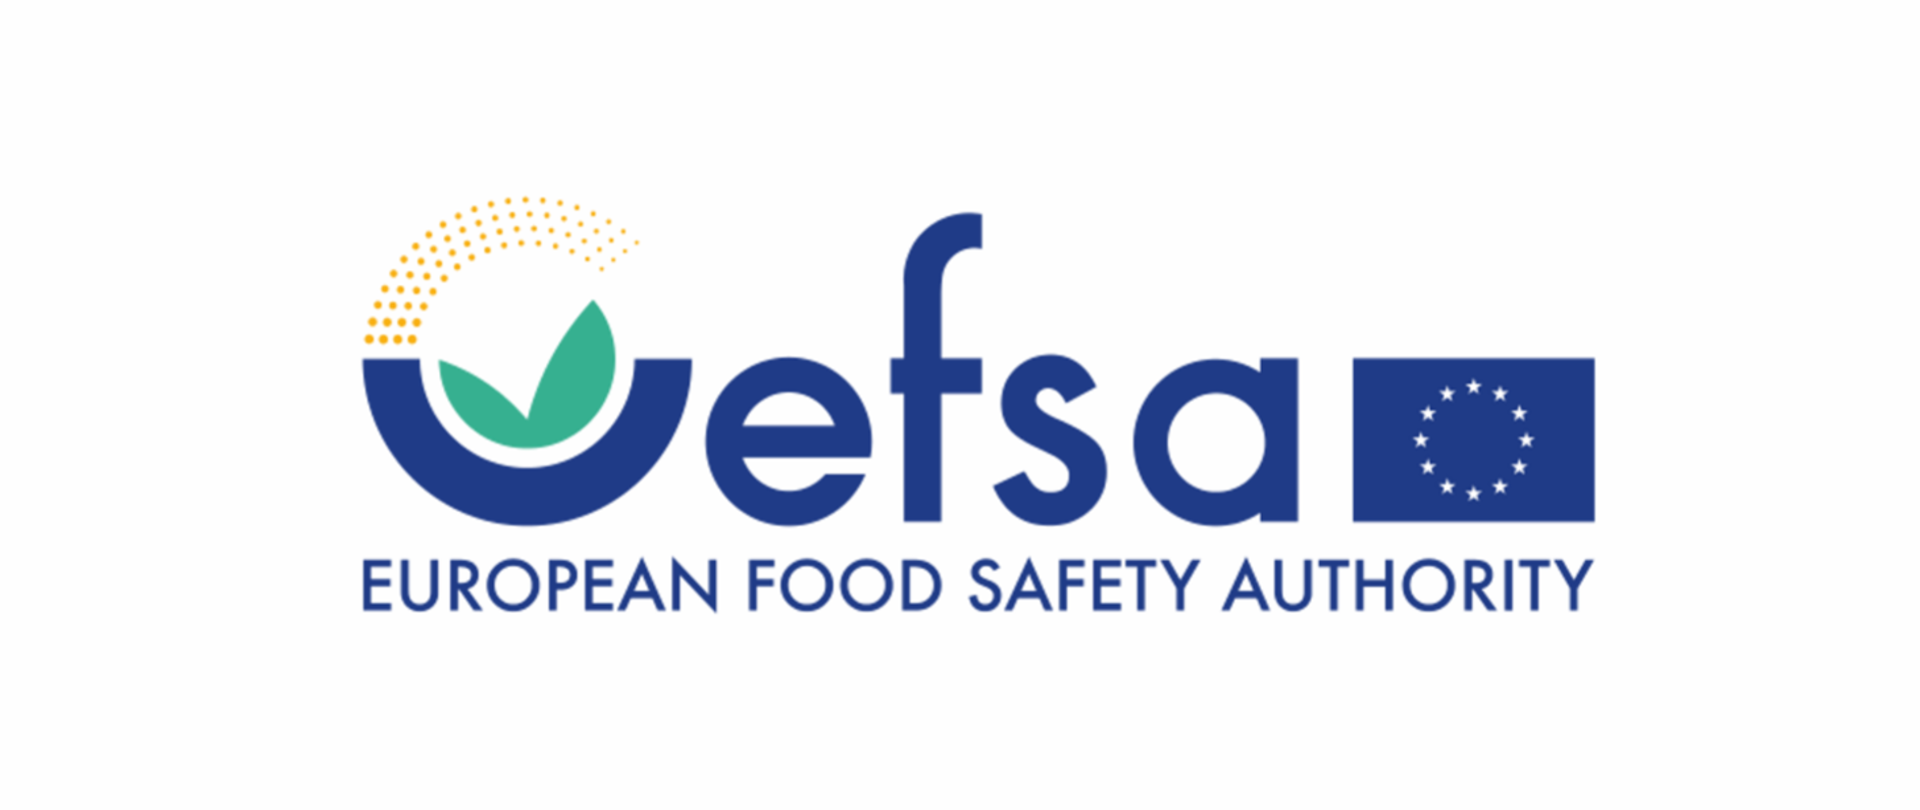 efsa - European Food Safety Authority